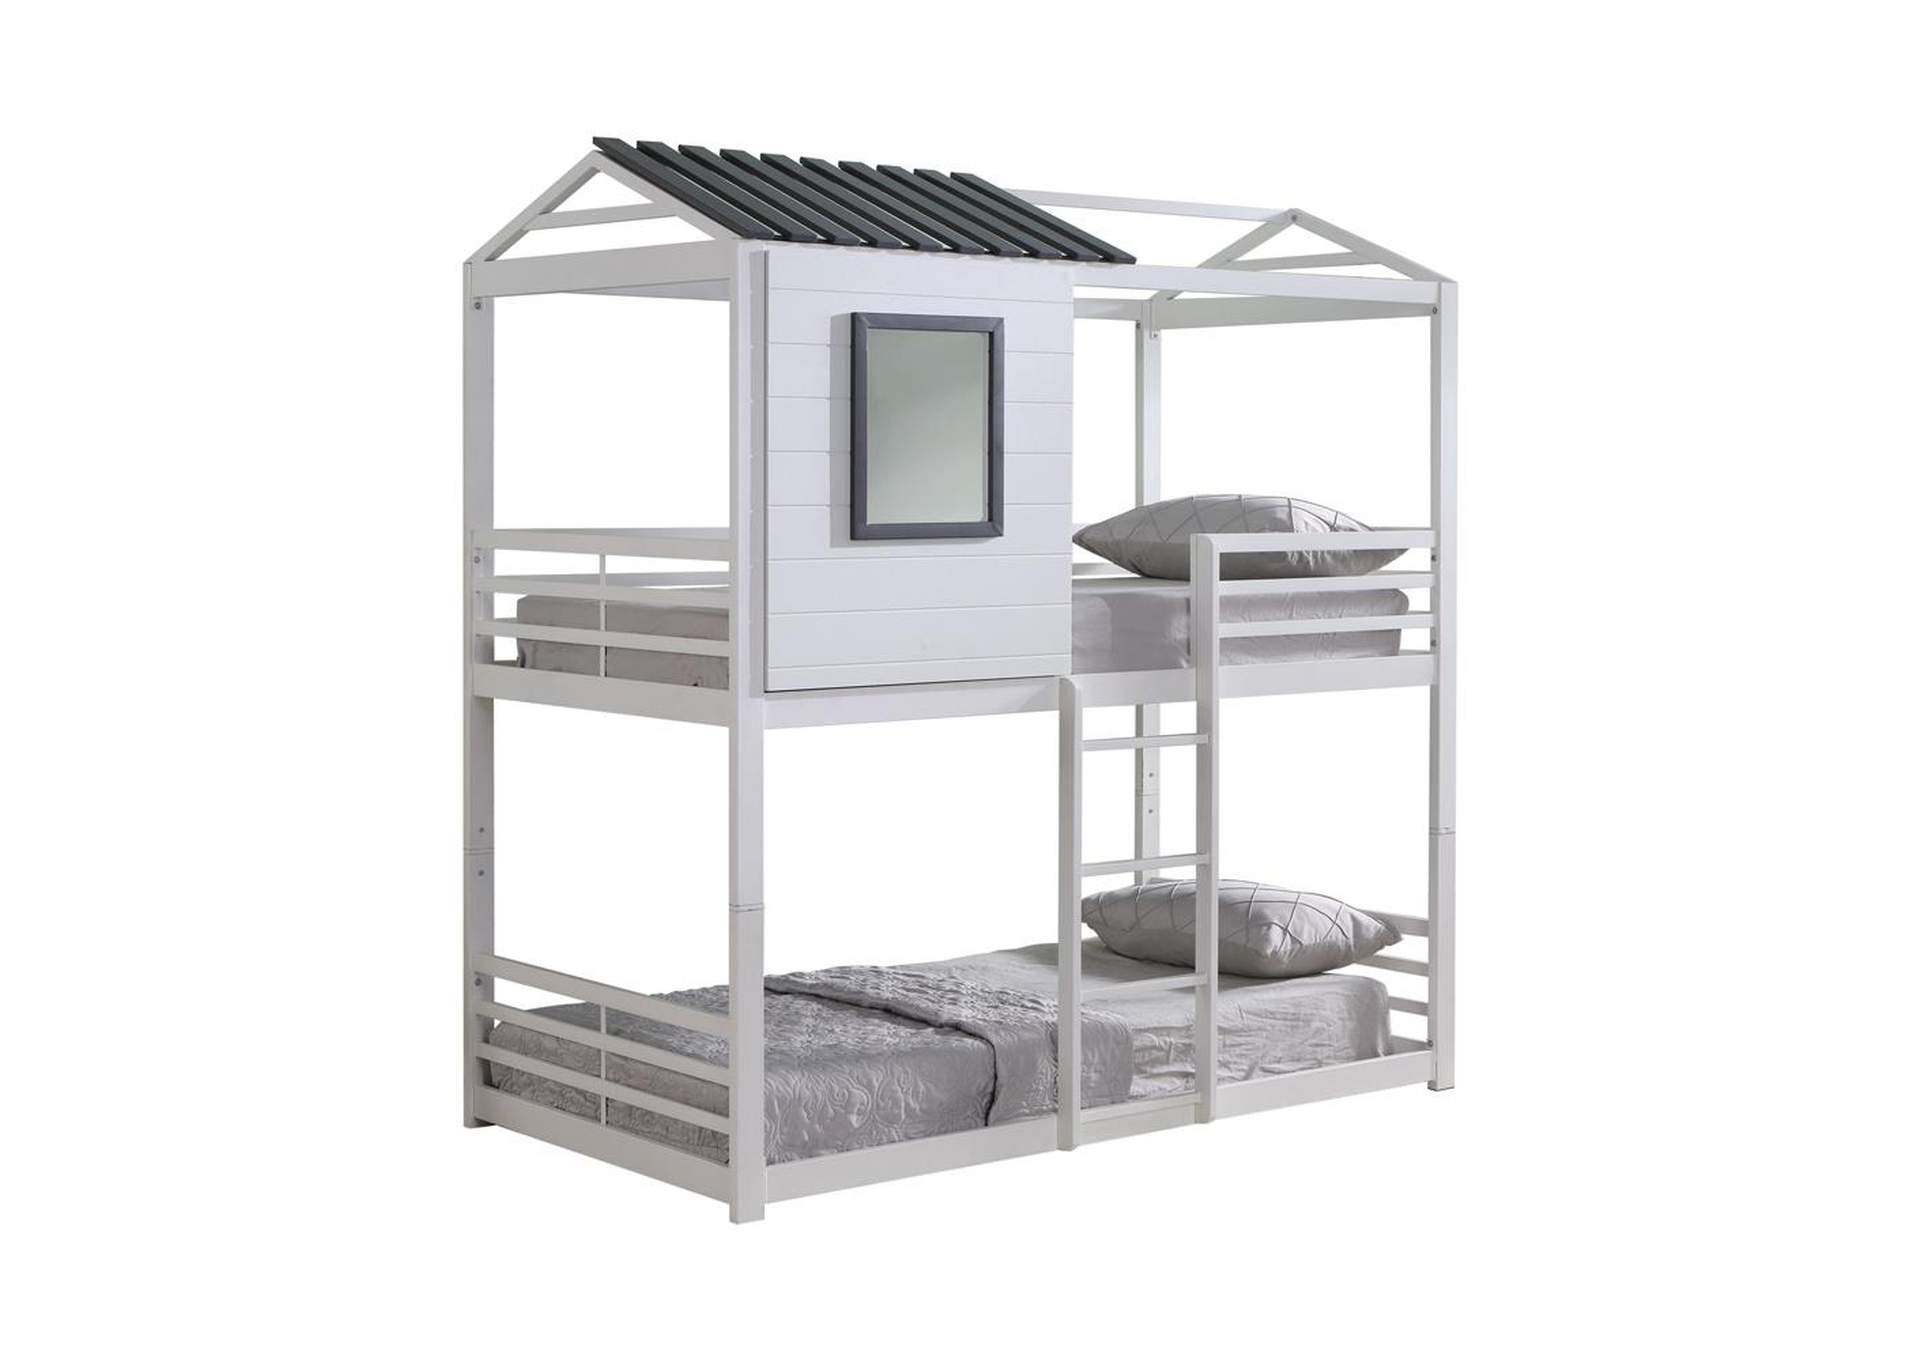 Belton Light Grey Twin-Over-Twin Bunk Bed,Coaster Furniture